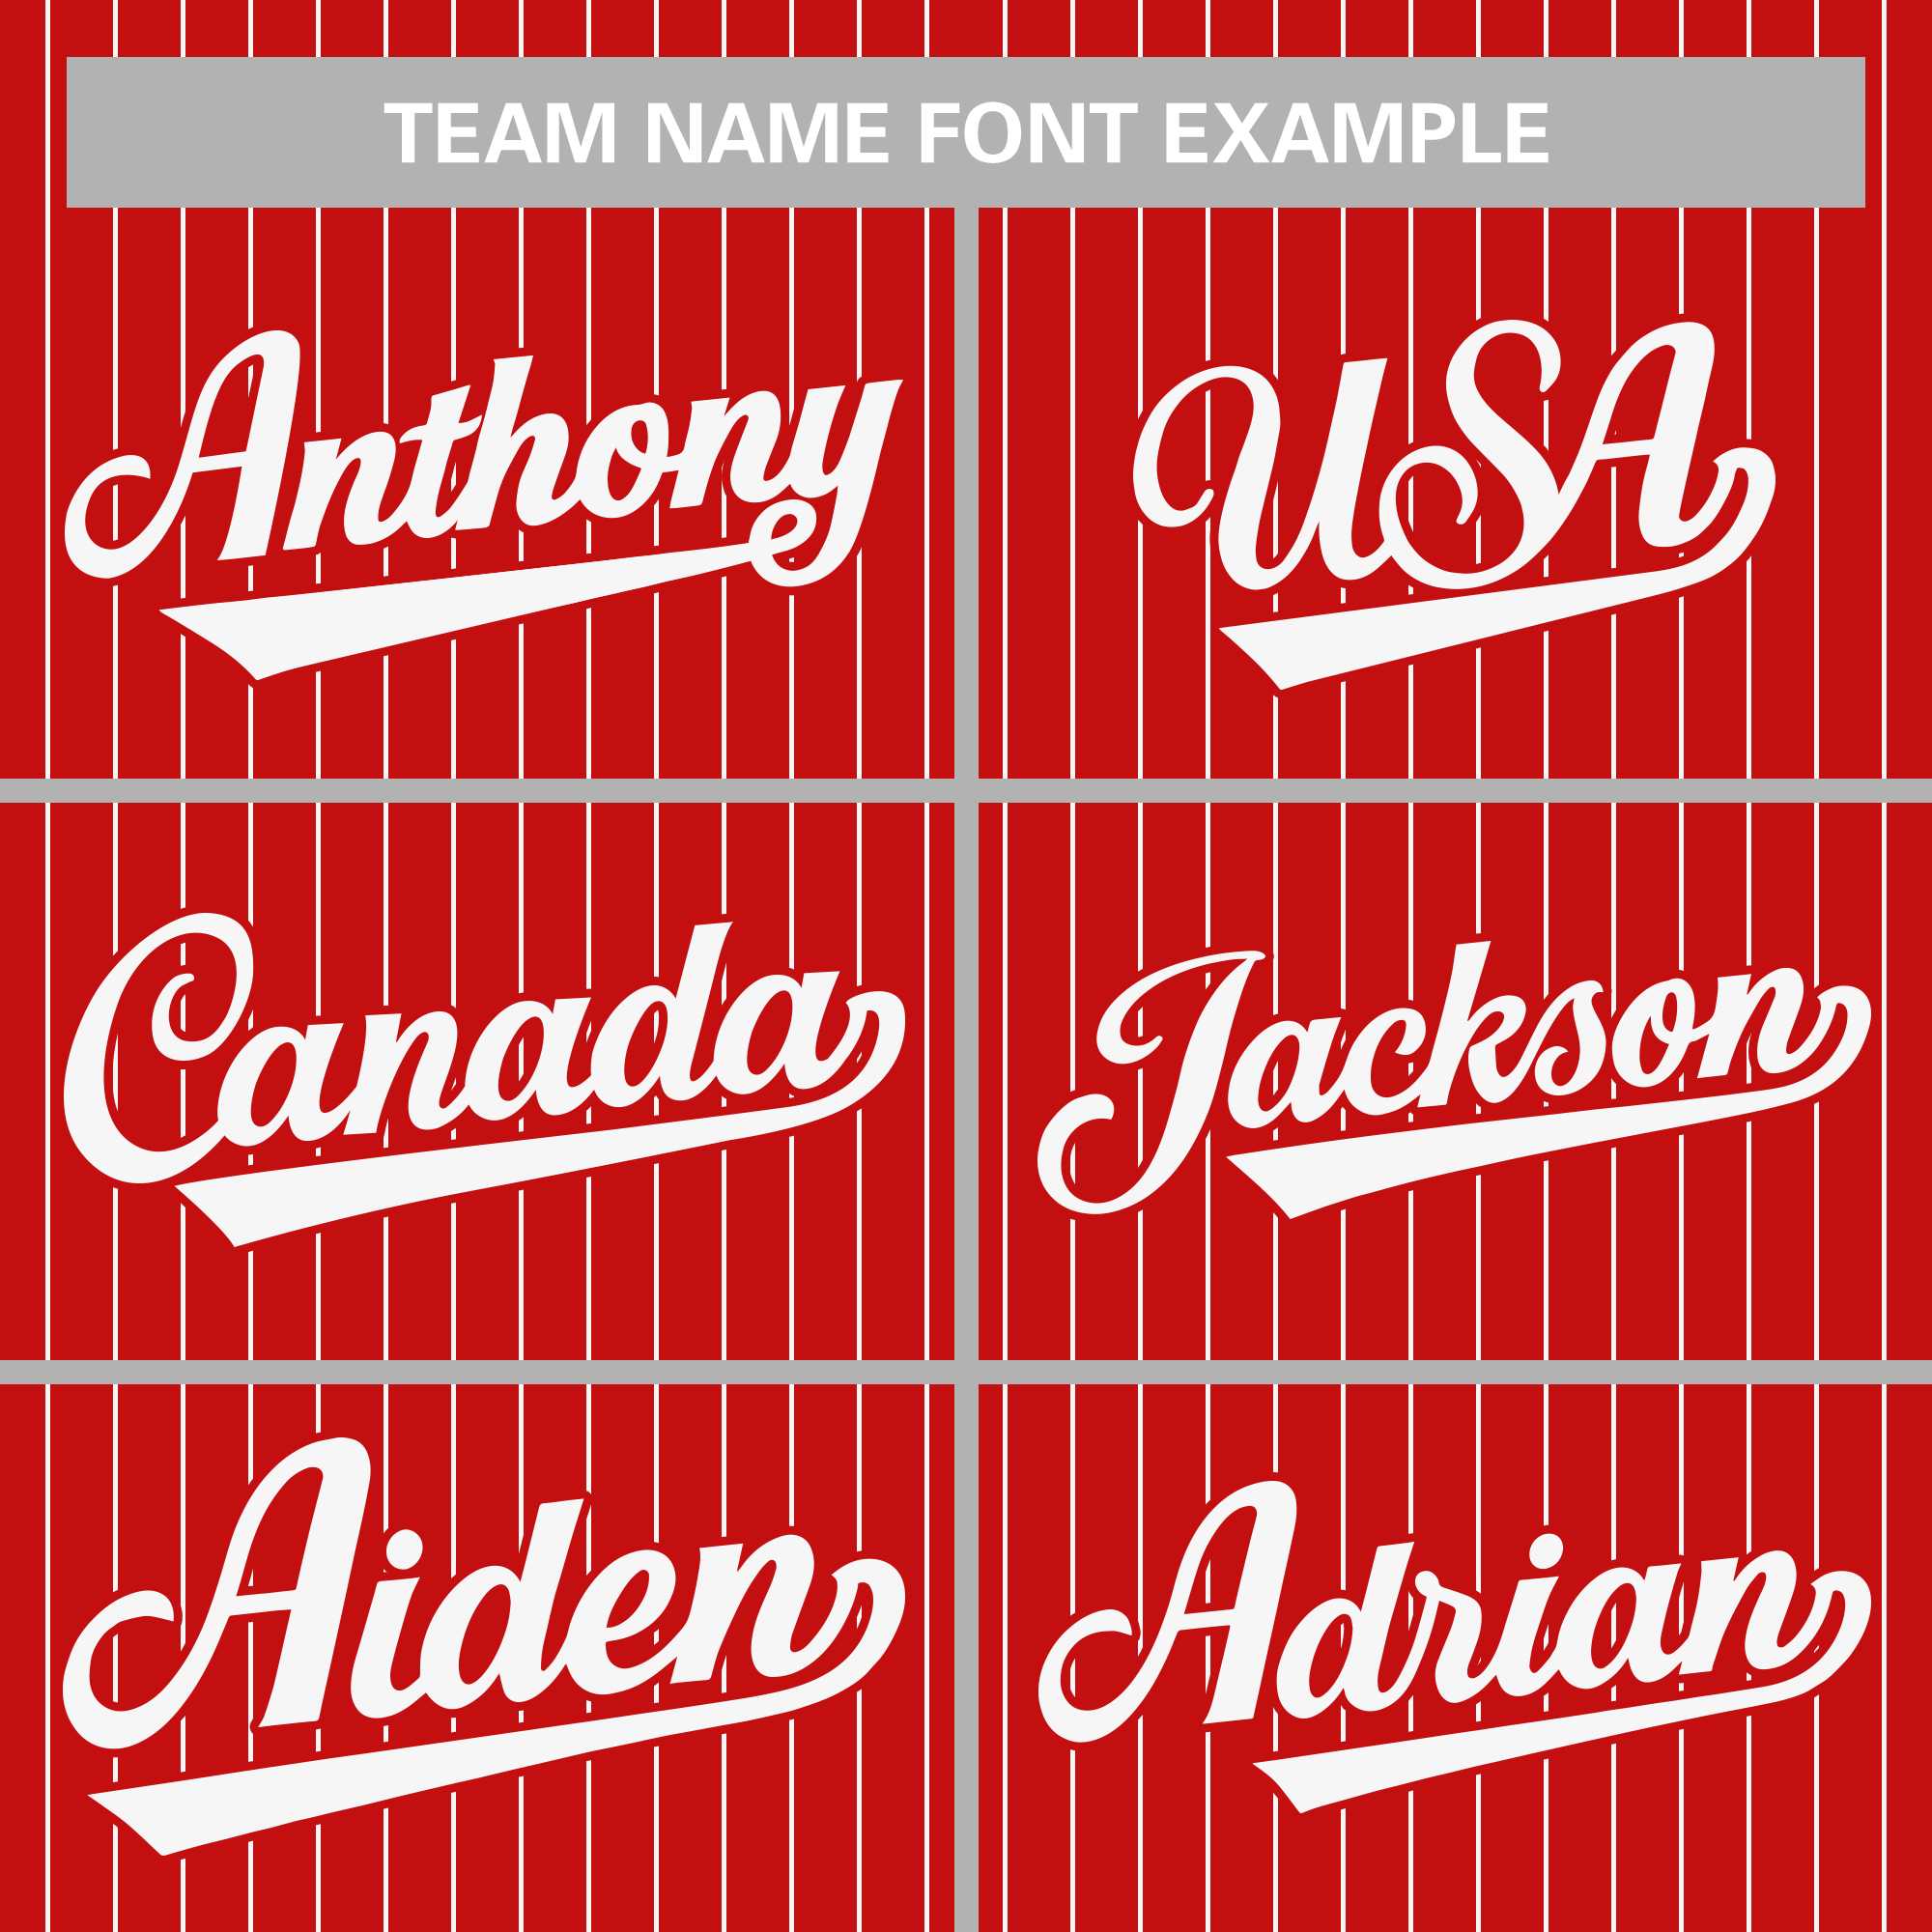 striped baseball jersey team name font